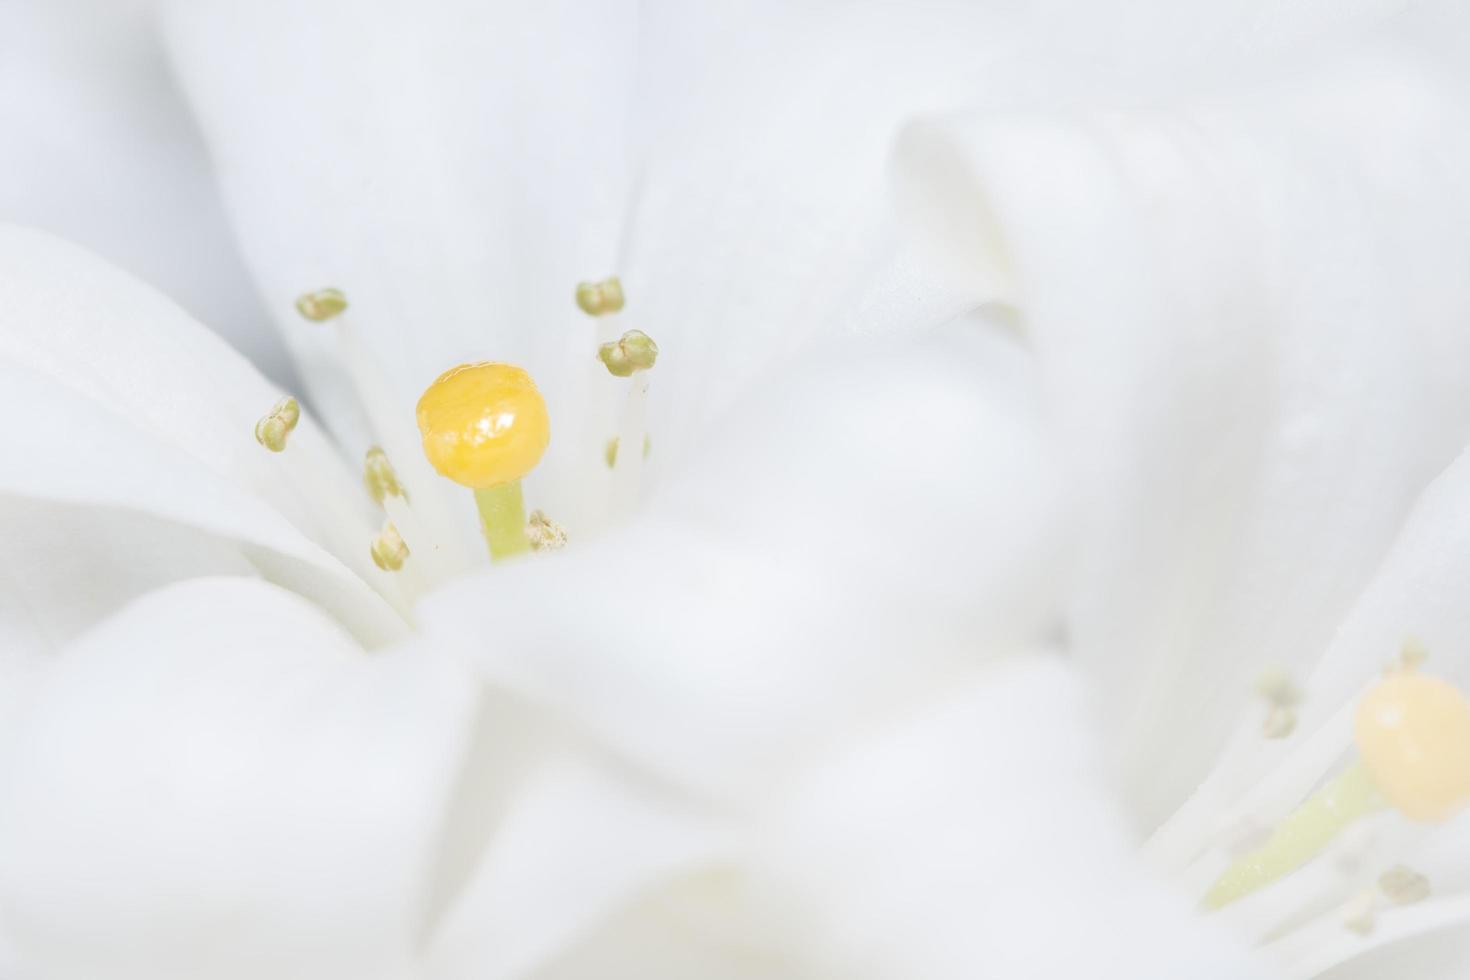 White flower, shallow depth of field macro photo